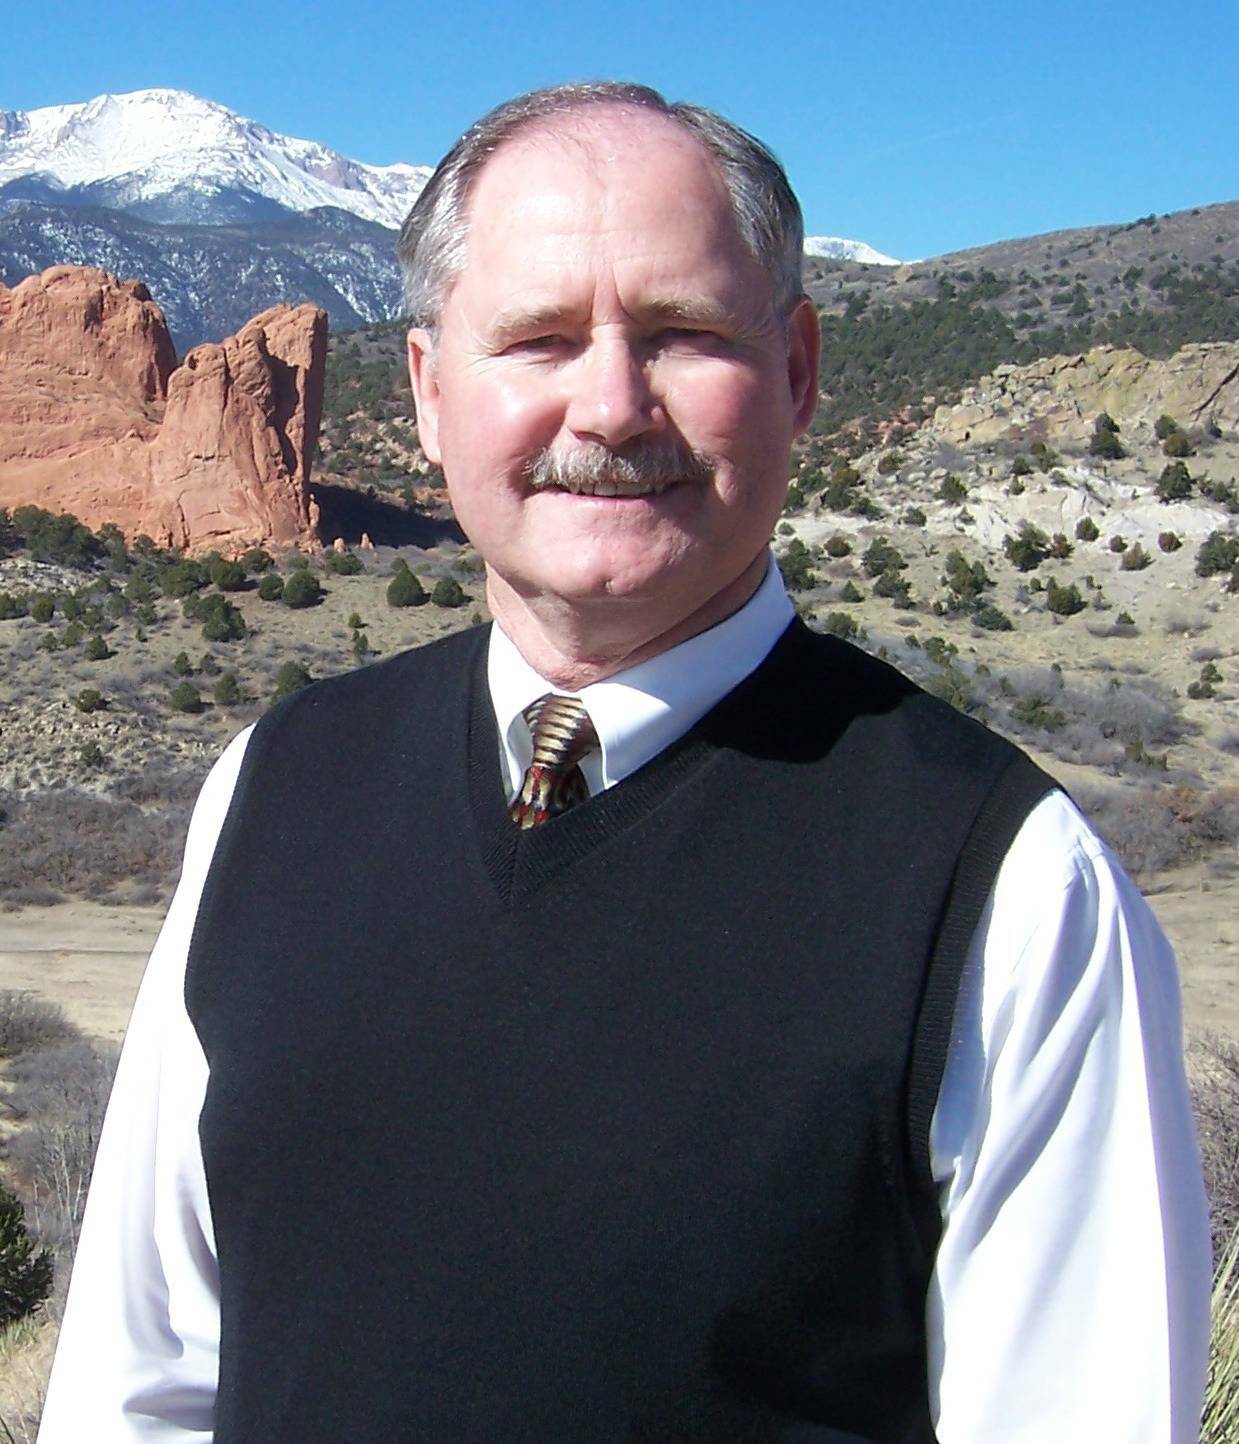 Guy Nanney, Real Estate Salesperson in Colorado Springs, ERA Shields Real Estate